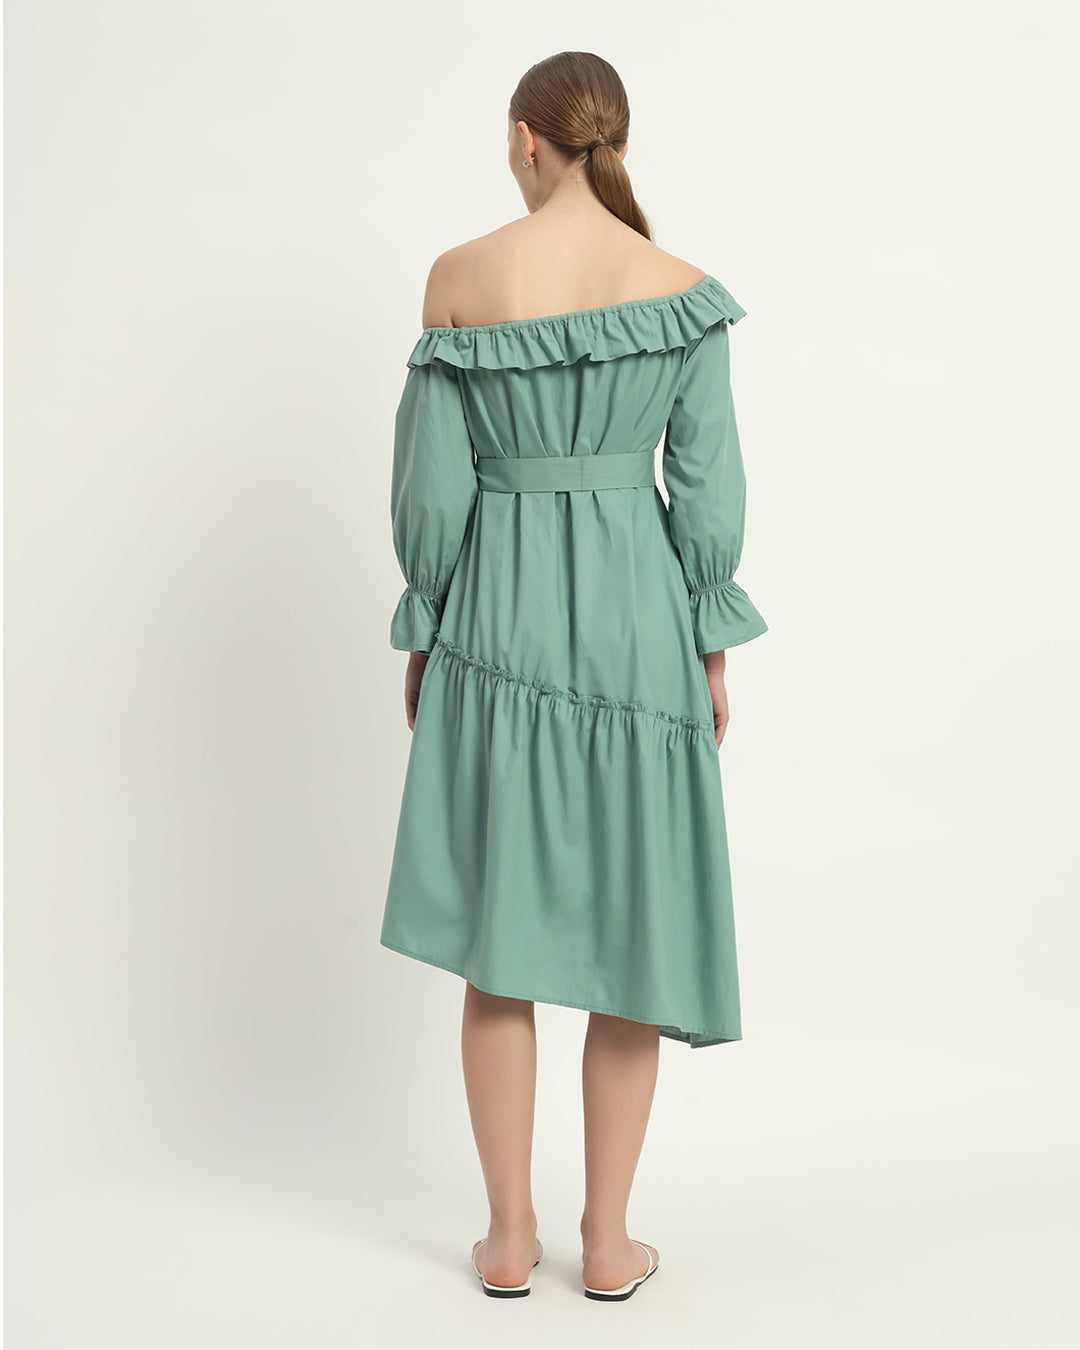 The Stellata Mint Cotton Dress